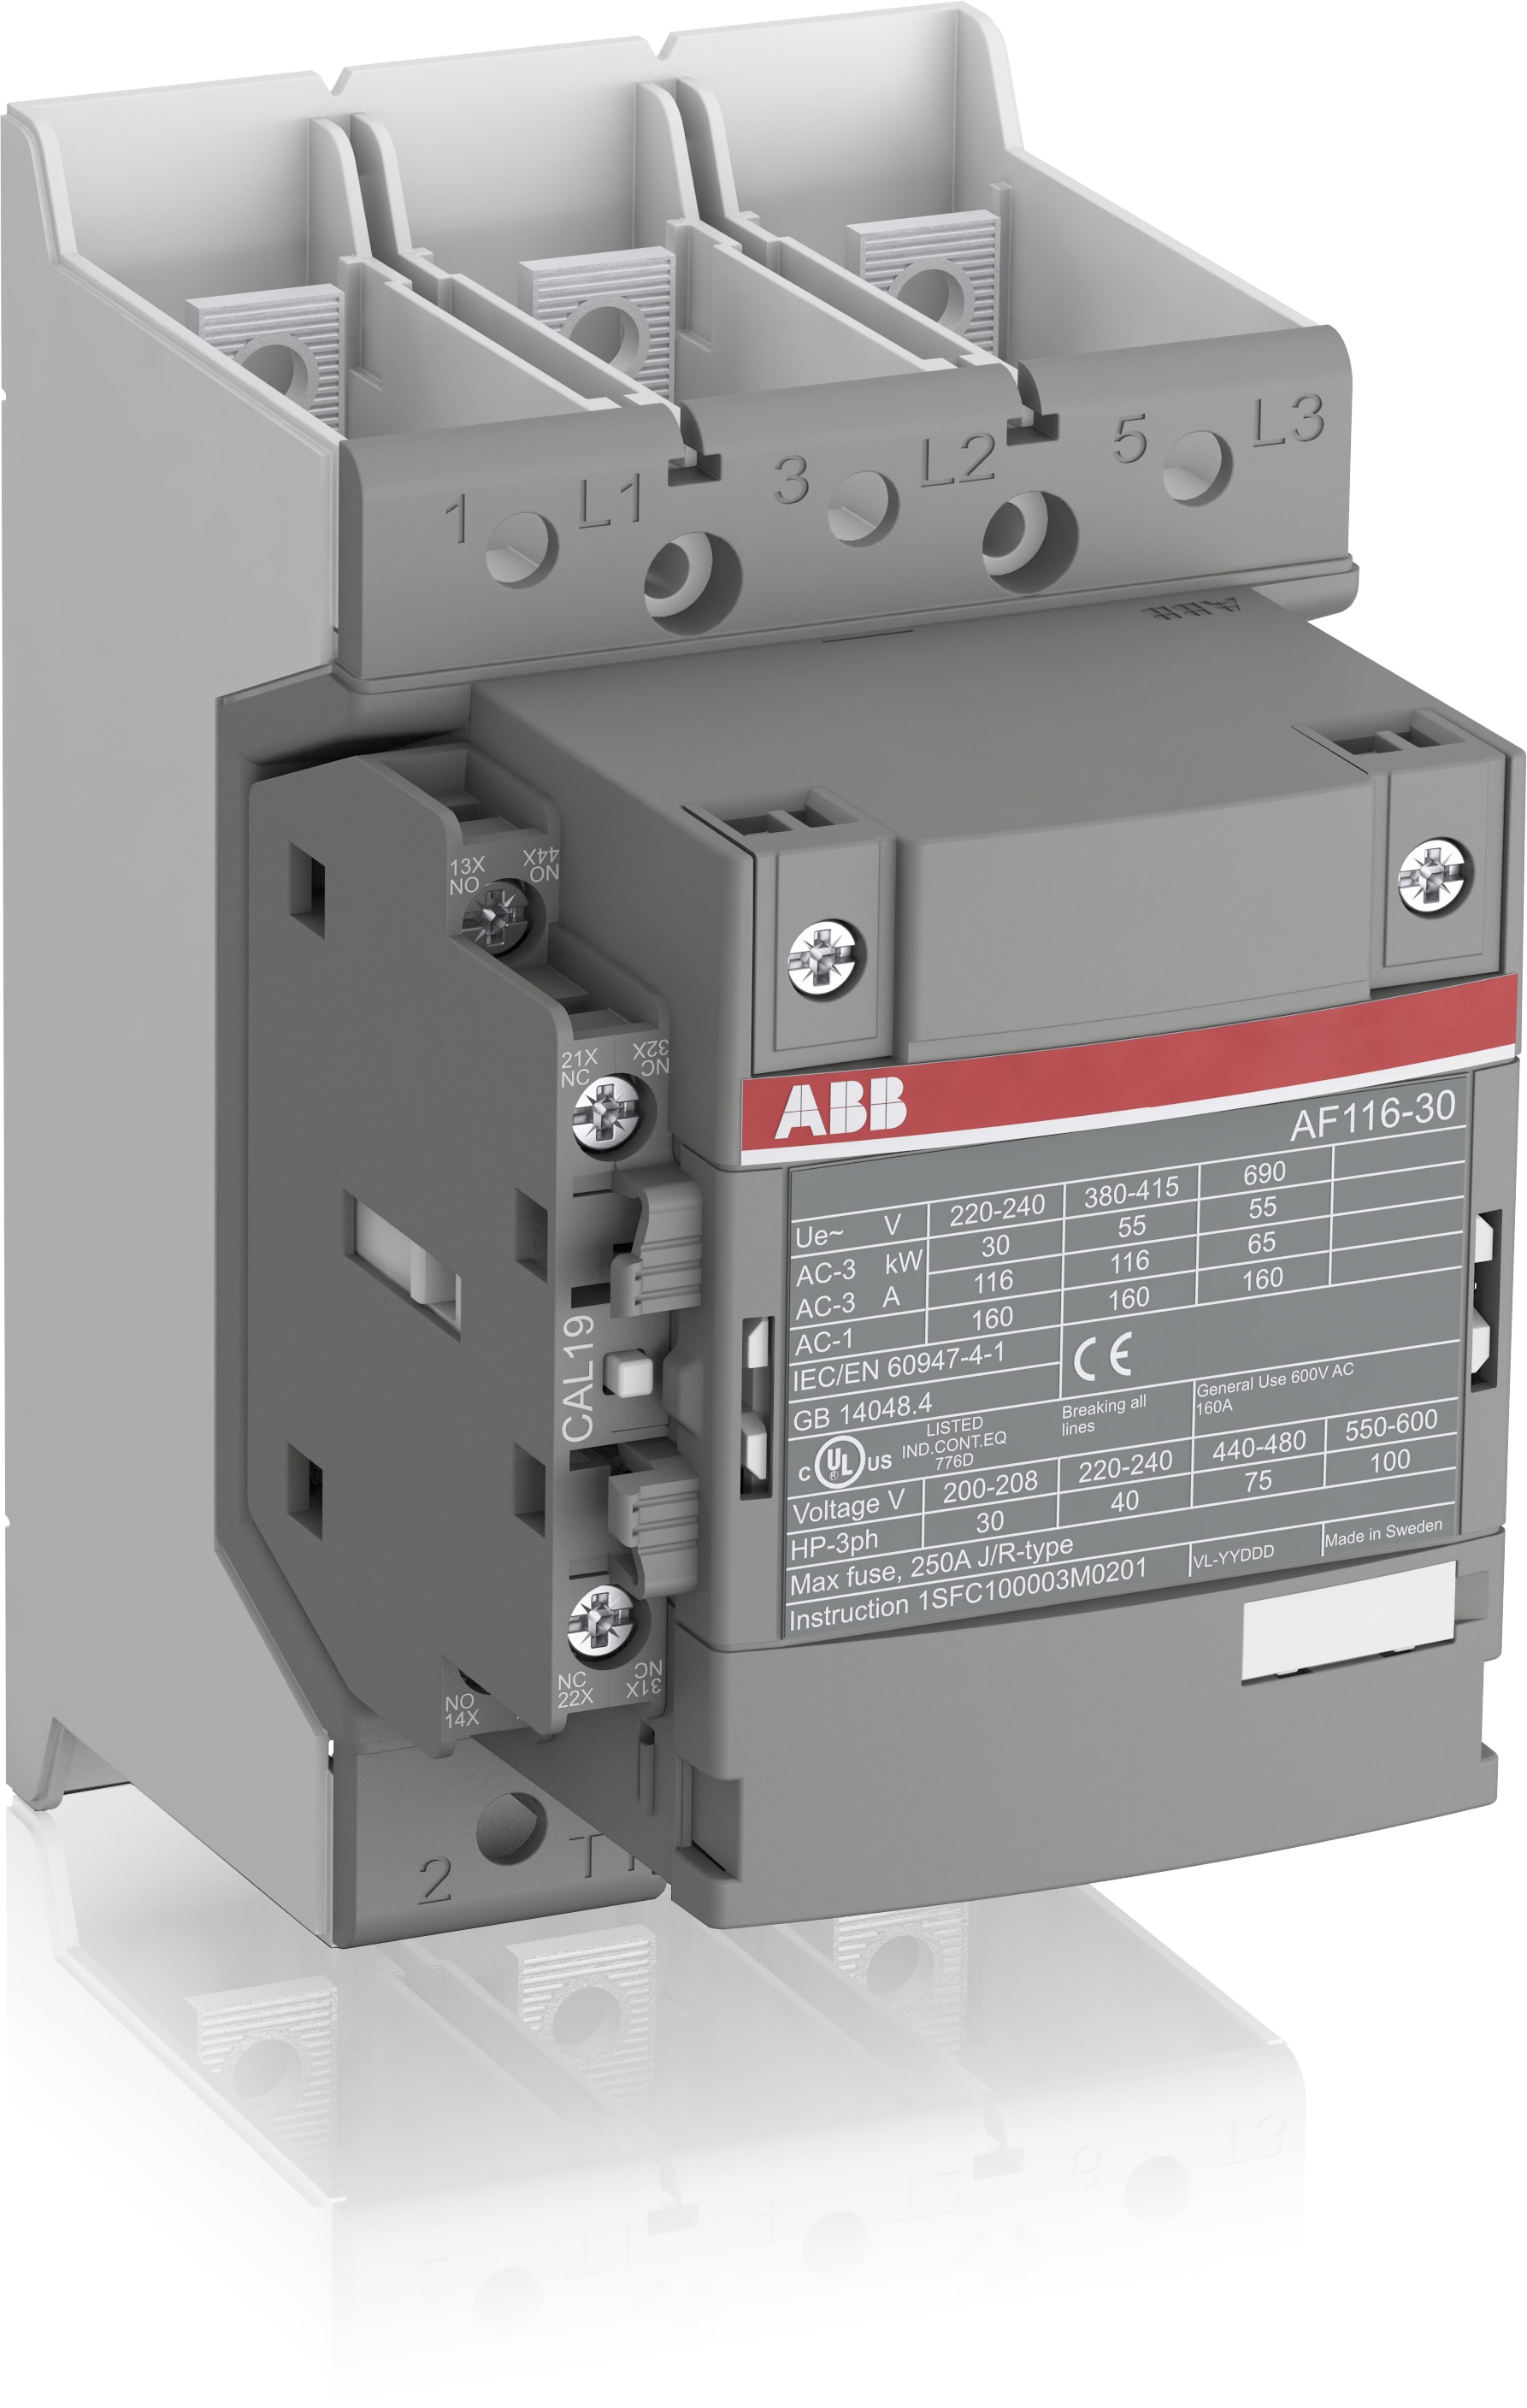 ABB Electrification - AF116-30-11-14B 250-500V 50/60Hz/DC - Kontaktor med skinnetilkobling. Med 1NO+1NC hjelpekontakt.